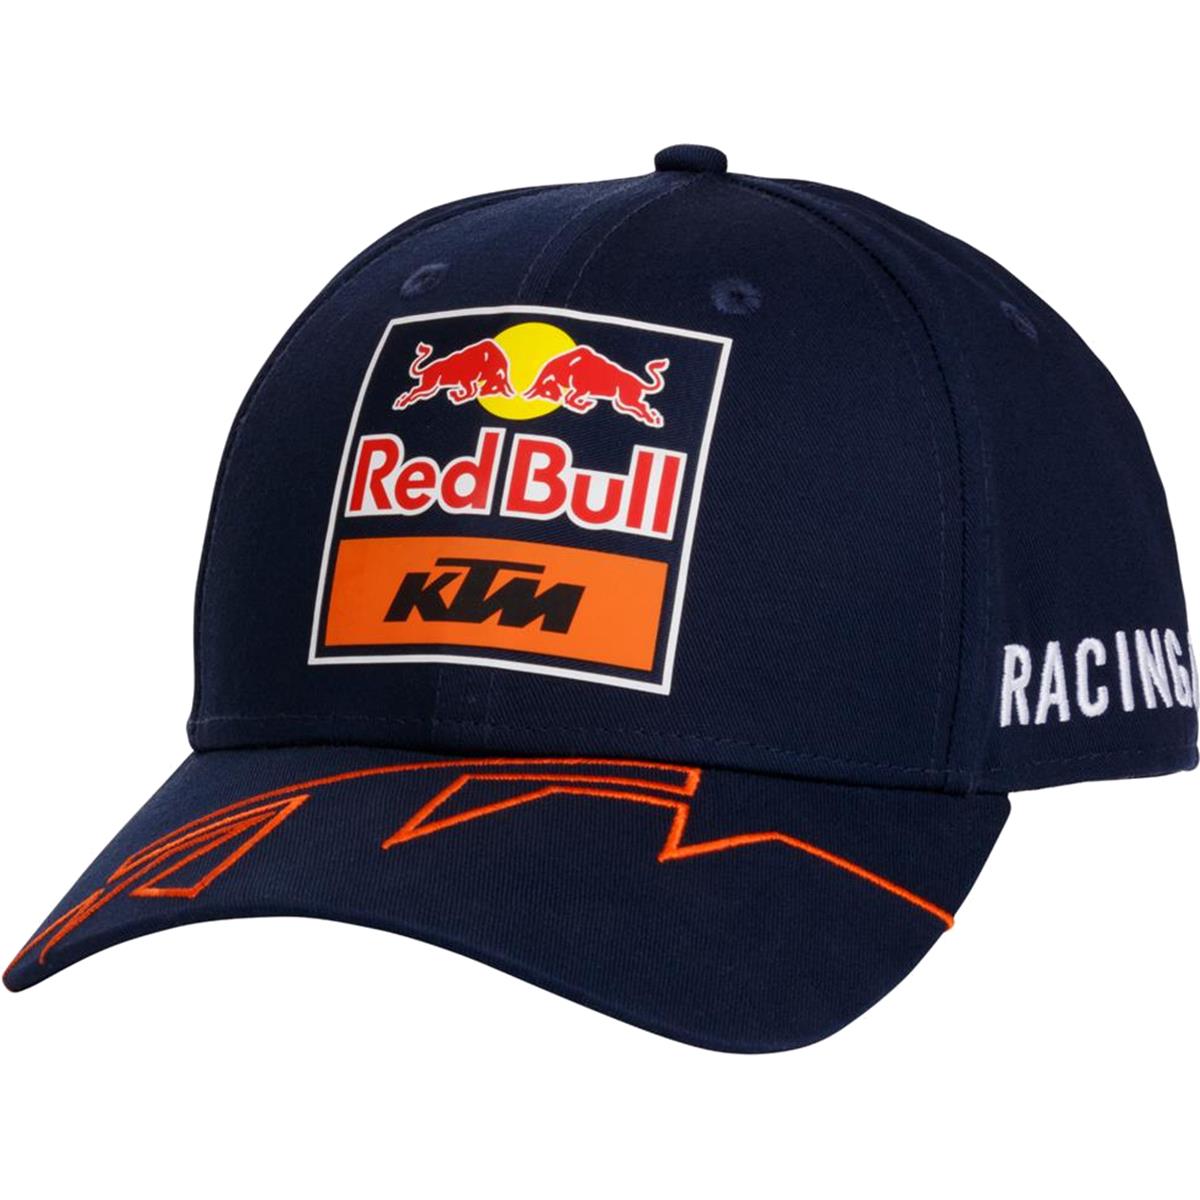 Red Bull Strapback Cap KTM New Era OTL